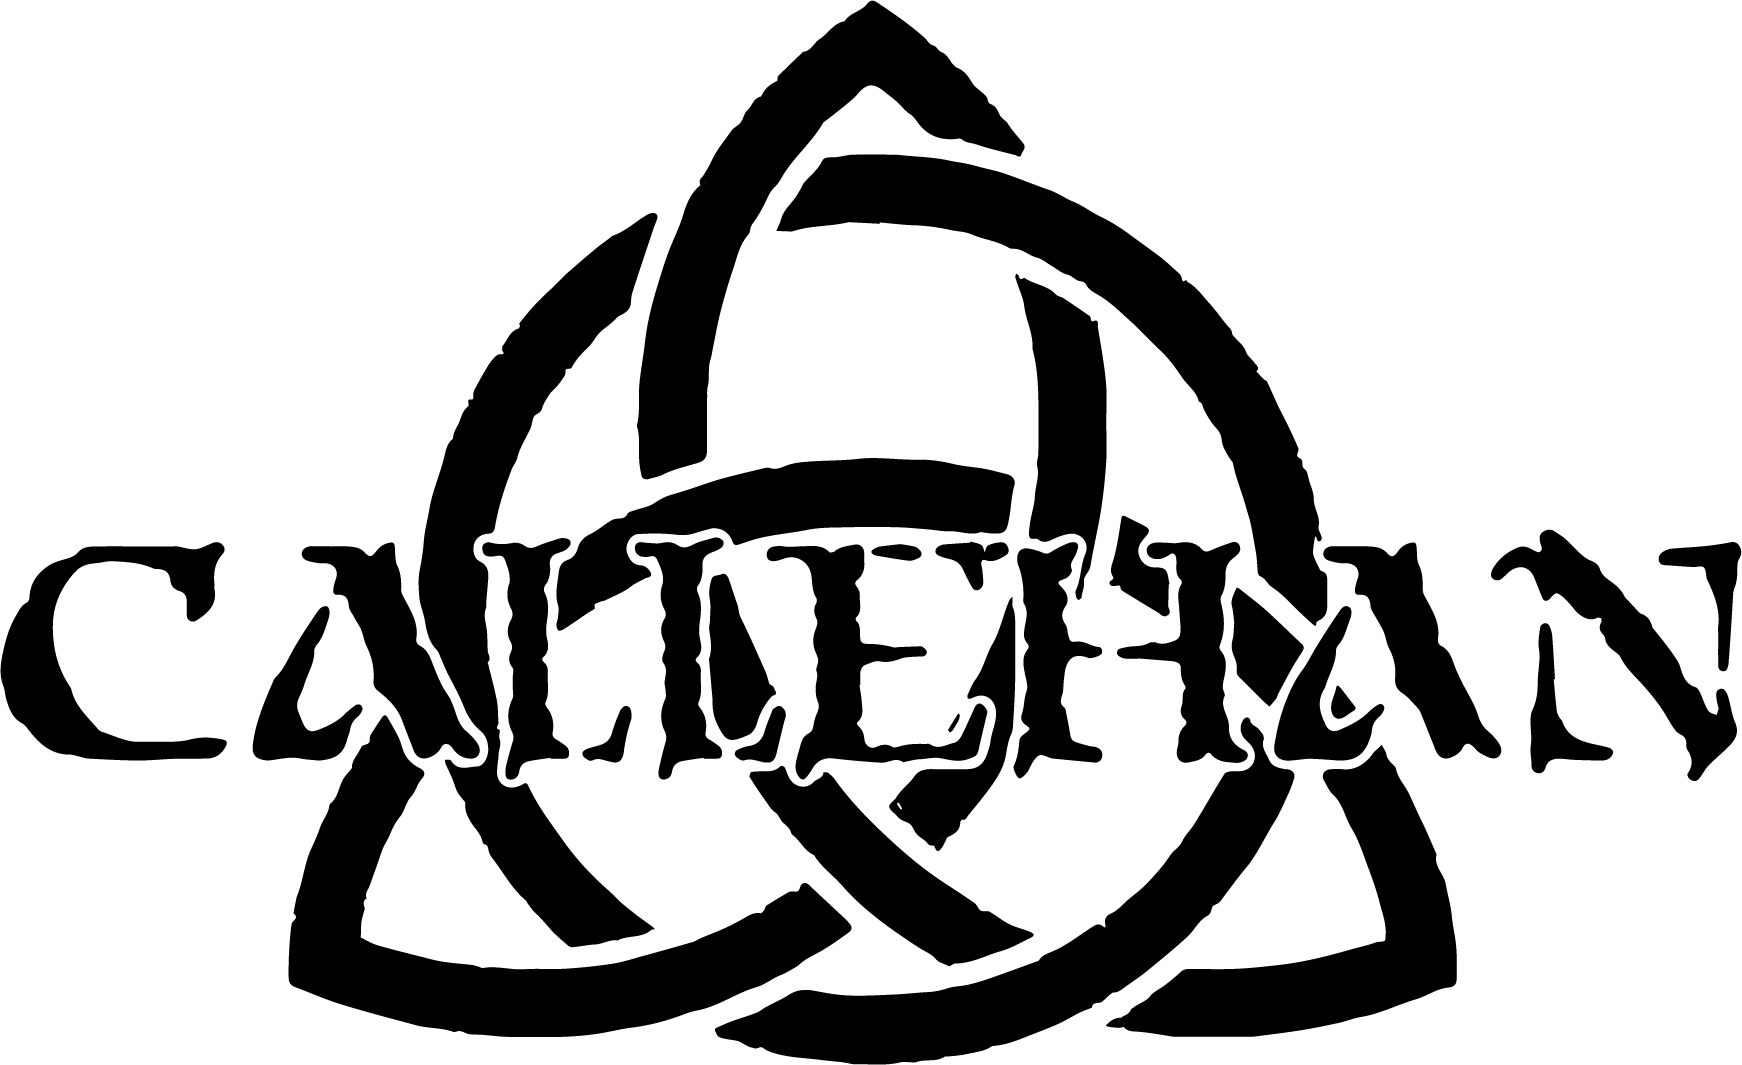 Callehan band logo